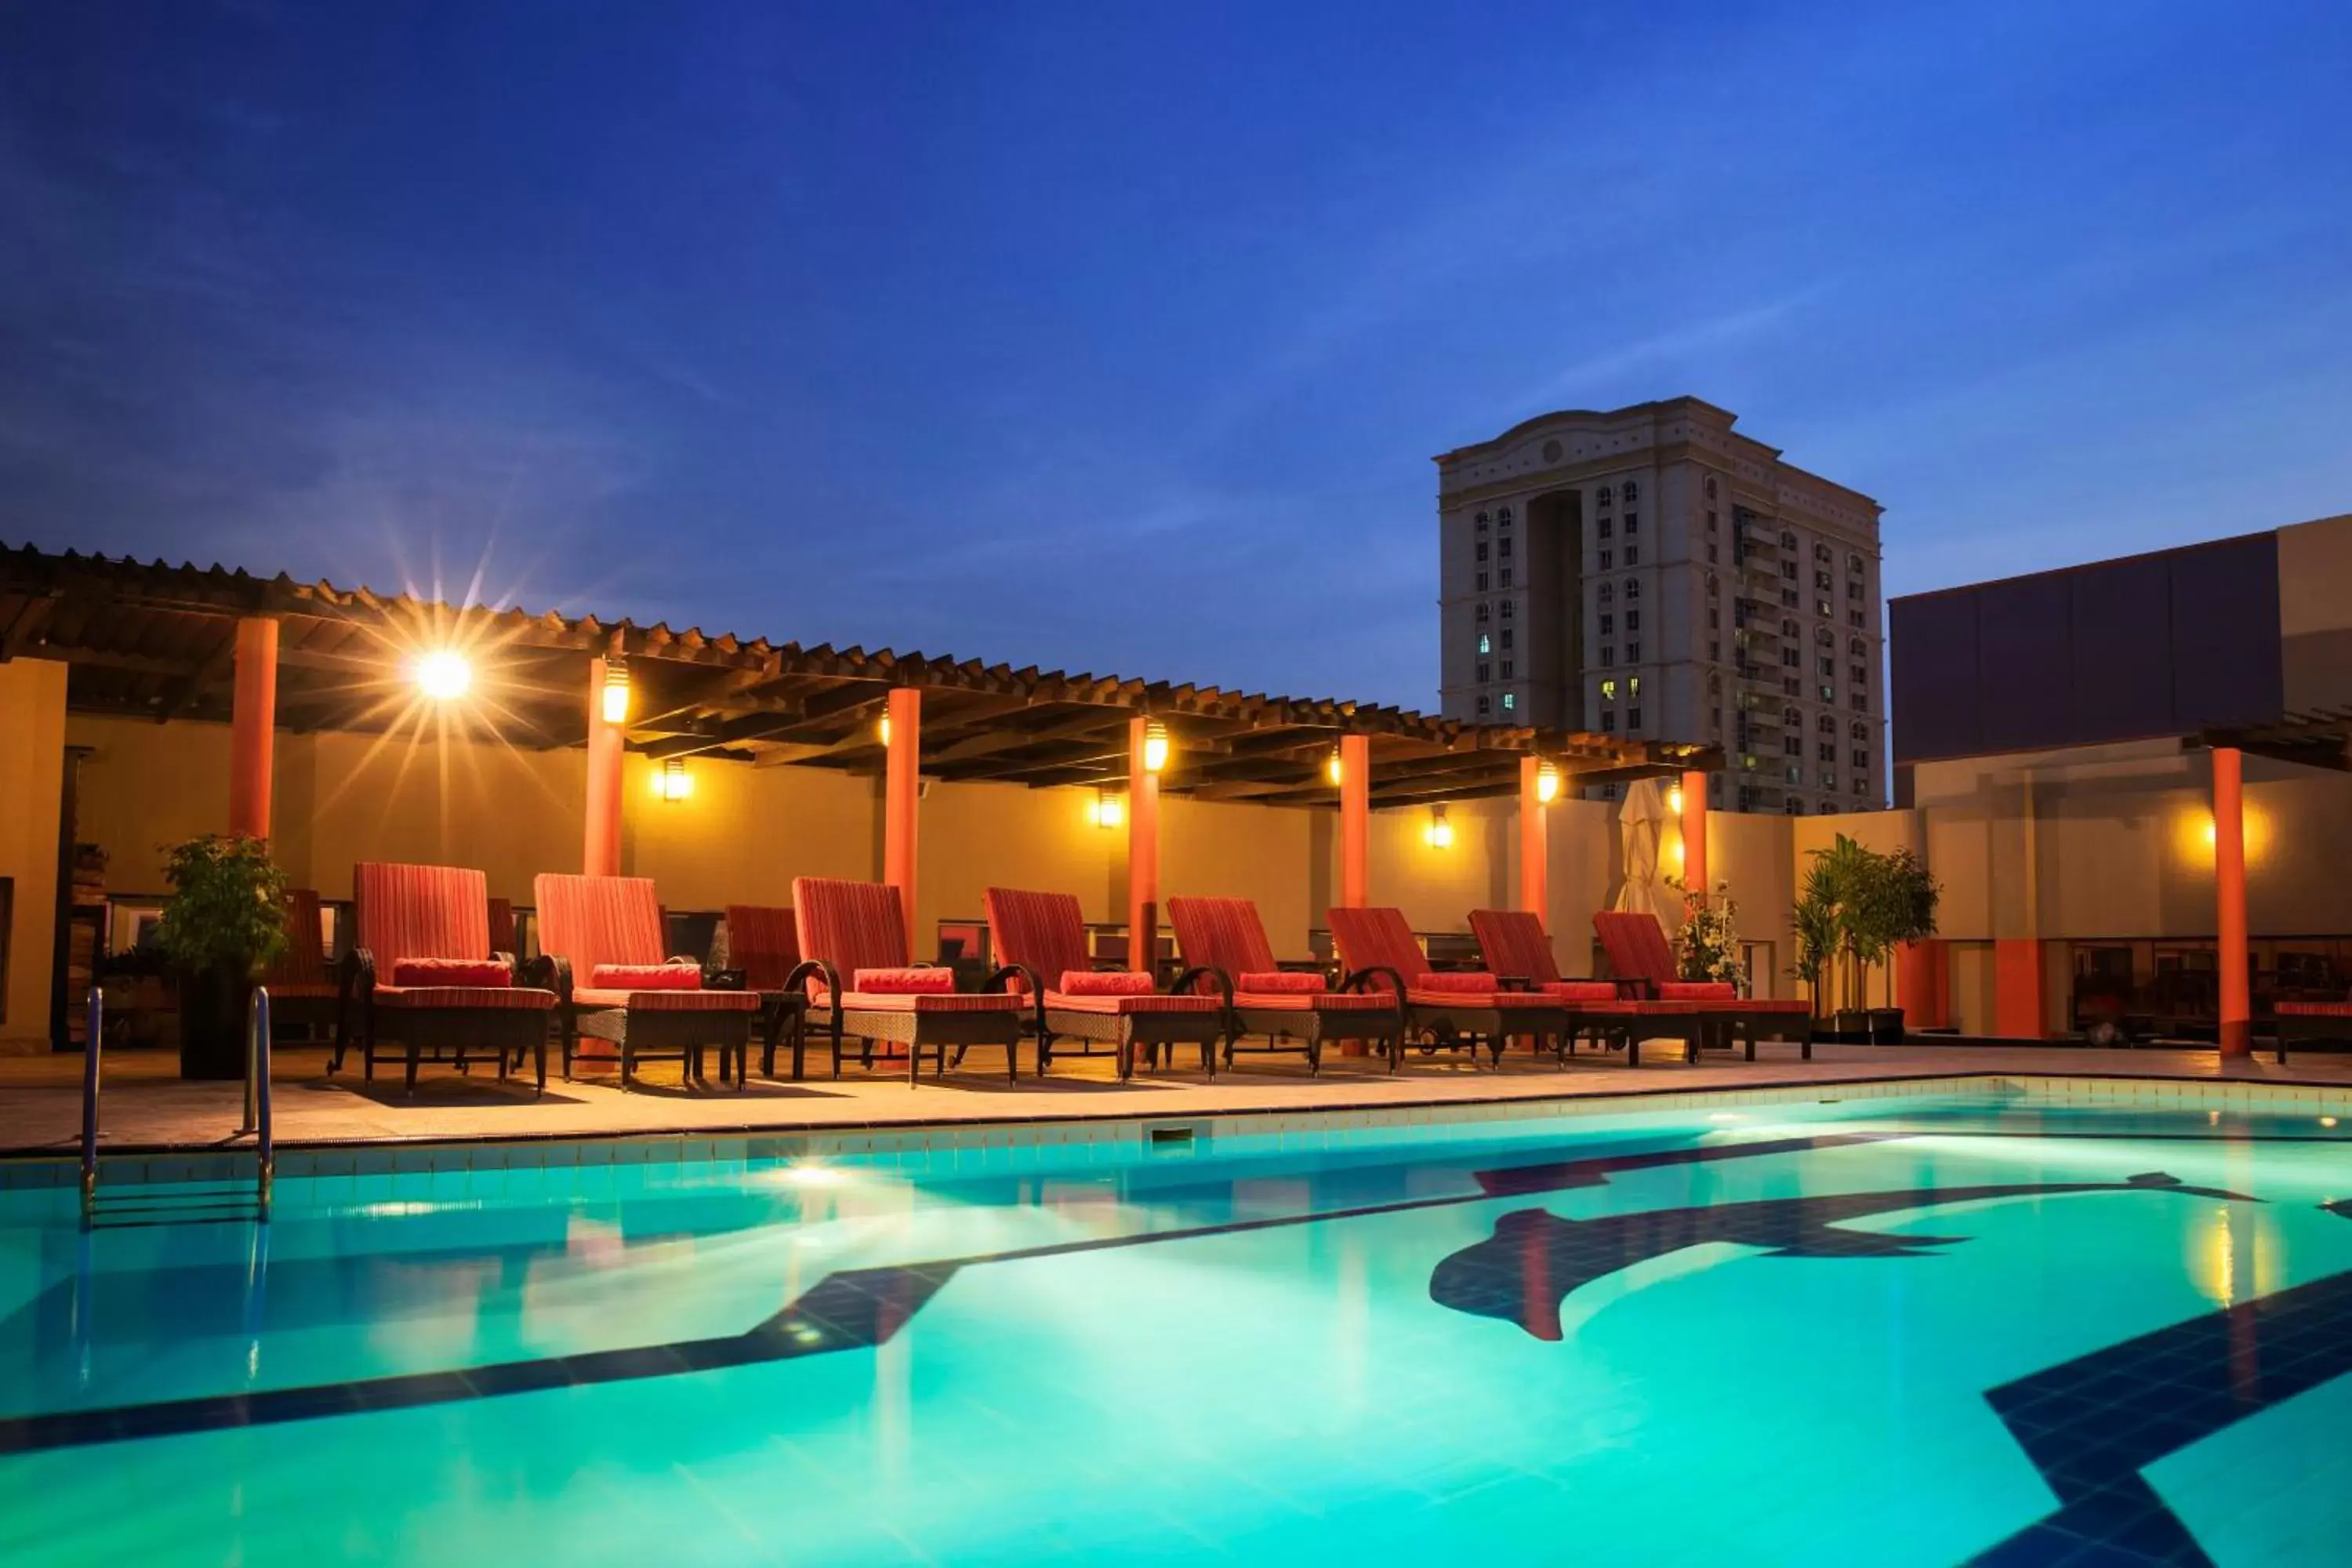 Swimming pool in Jumeira Rotana – Dubai